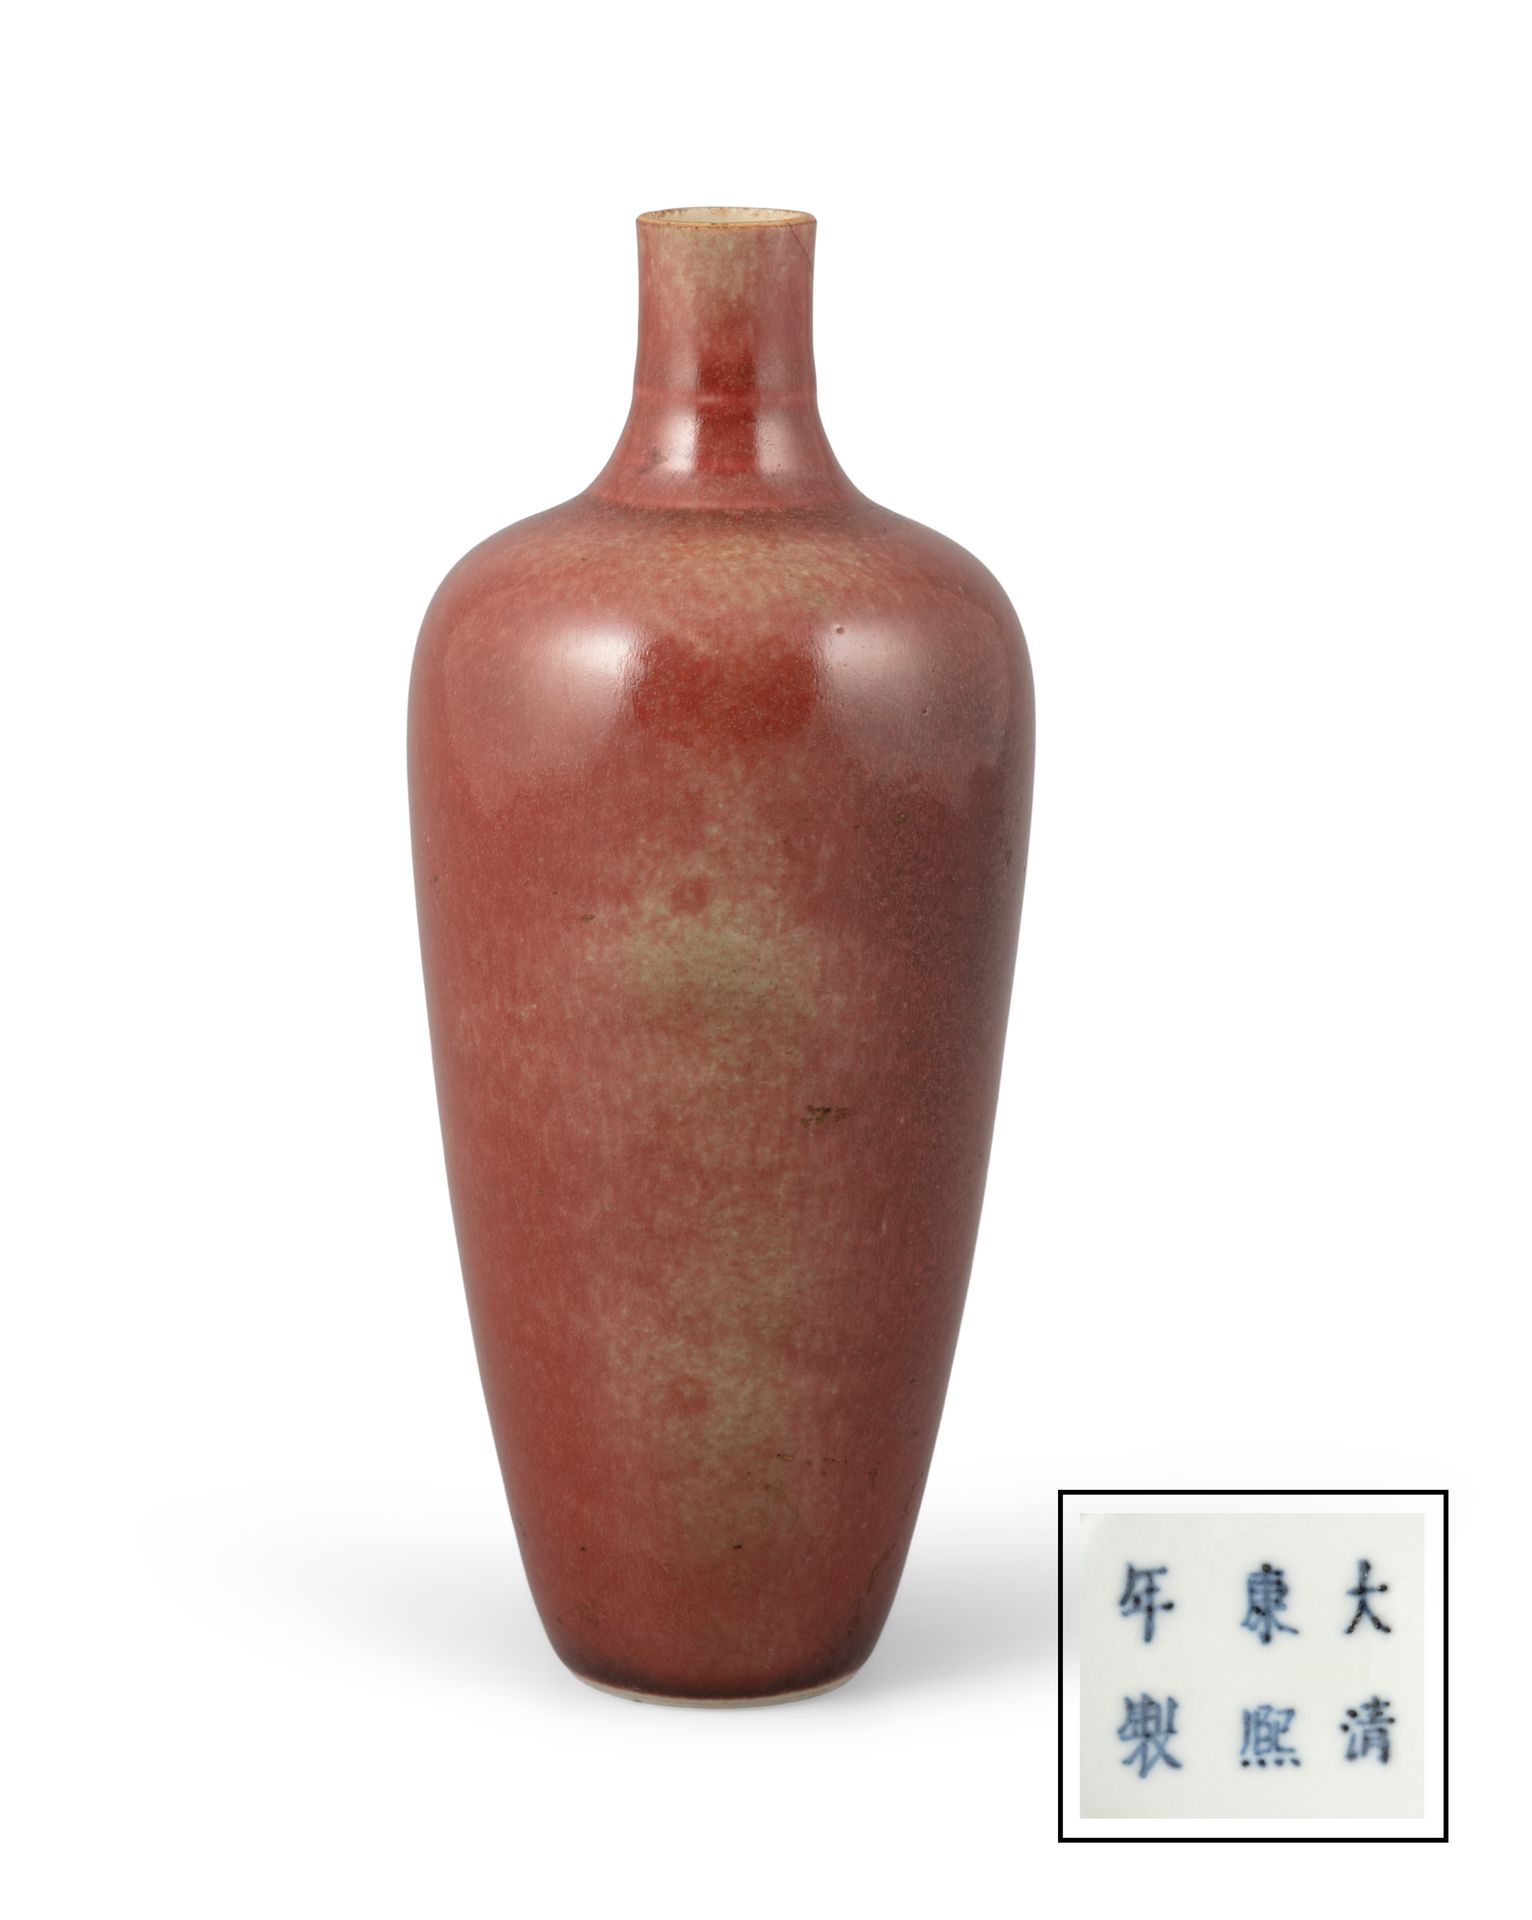 Null 椭圆形釉面瓷瓶 中国，清朝，可能是安溪时期 底部有钴蓝色的康熙六字款。高：19厘米